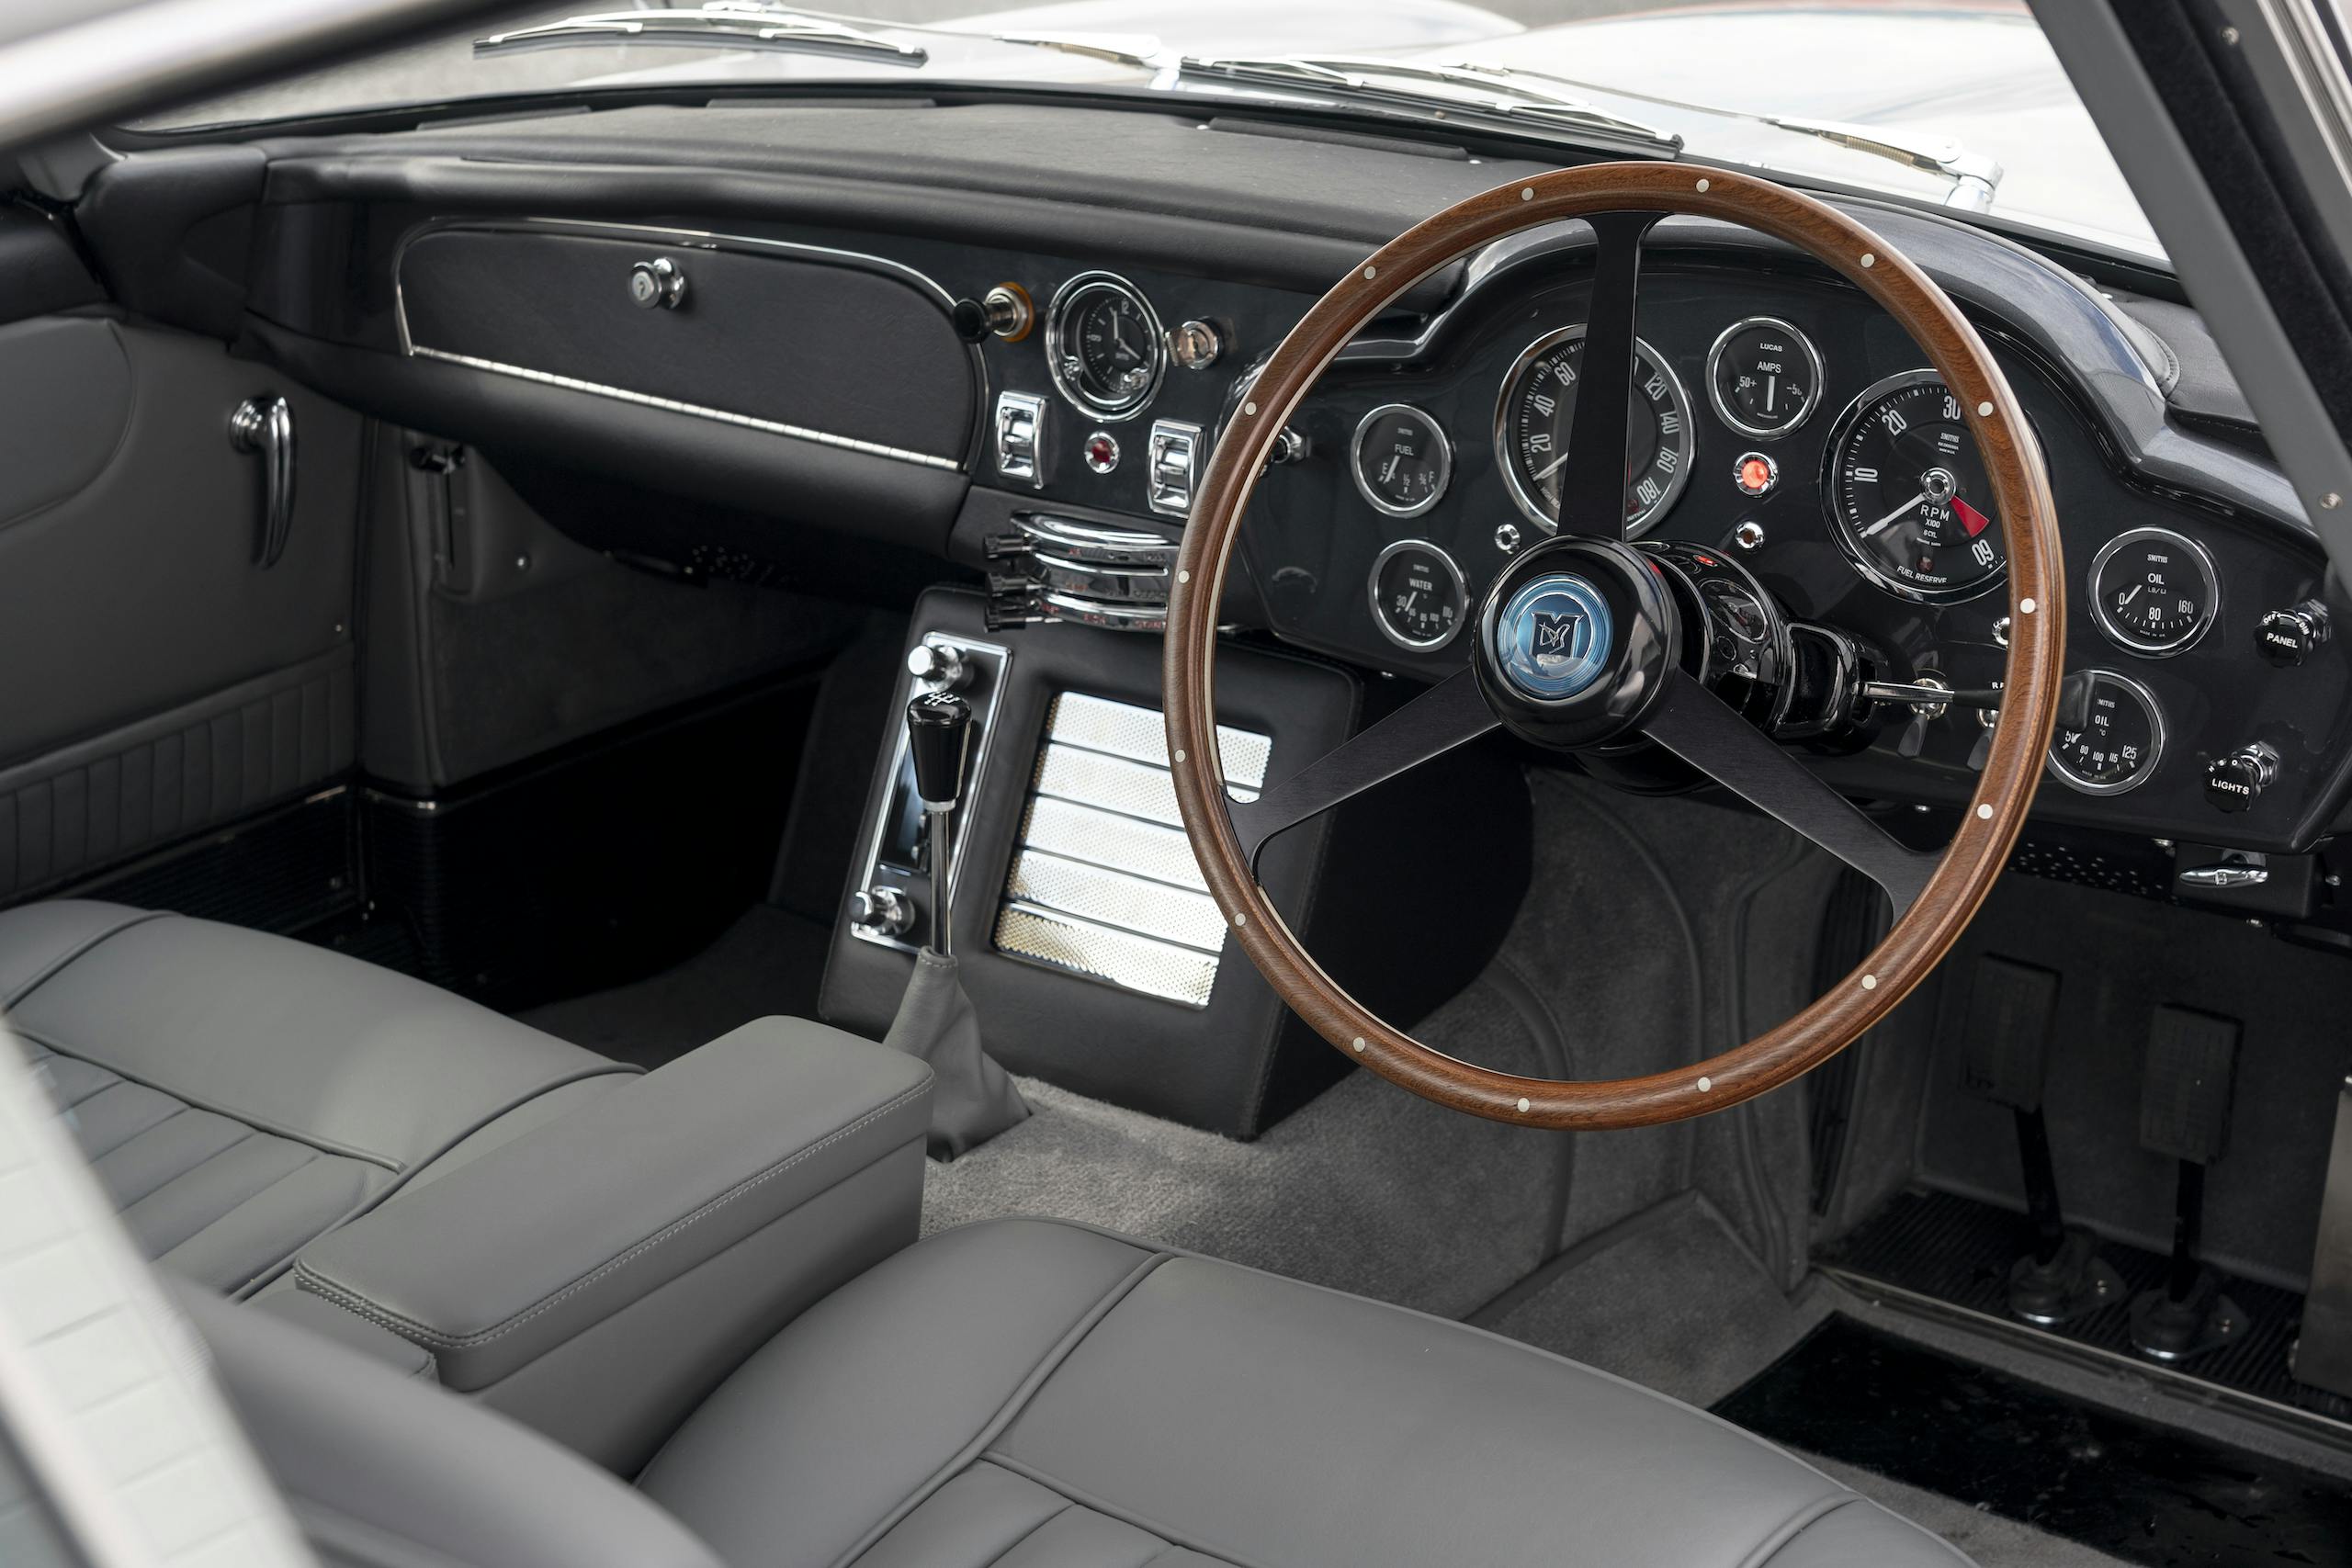 Aston Martin DB5 Goldfinger interior gadgets